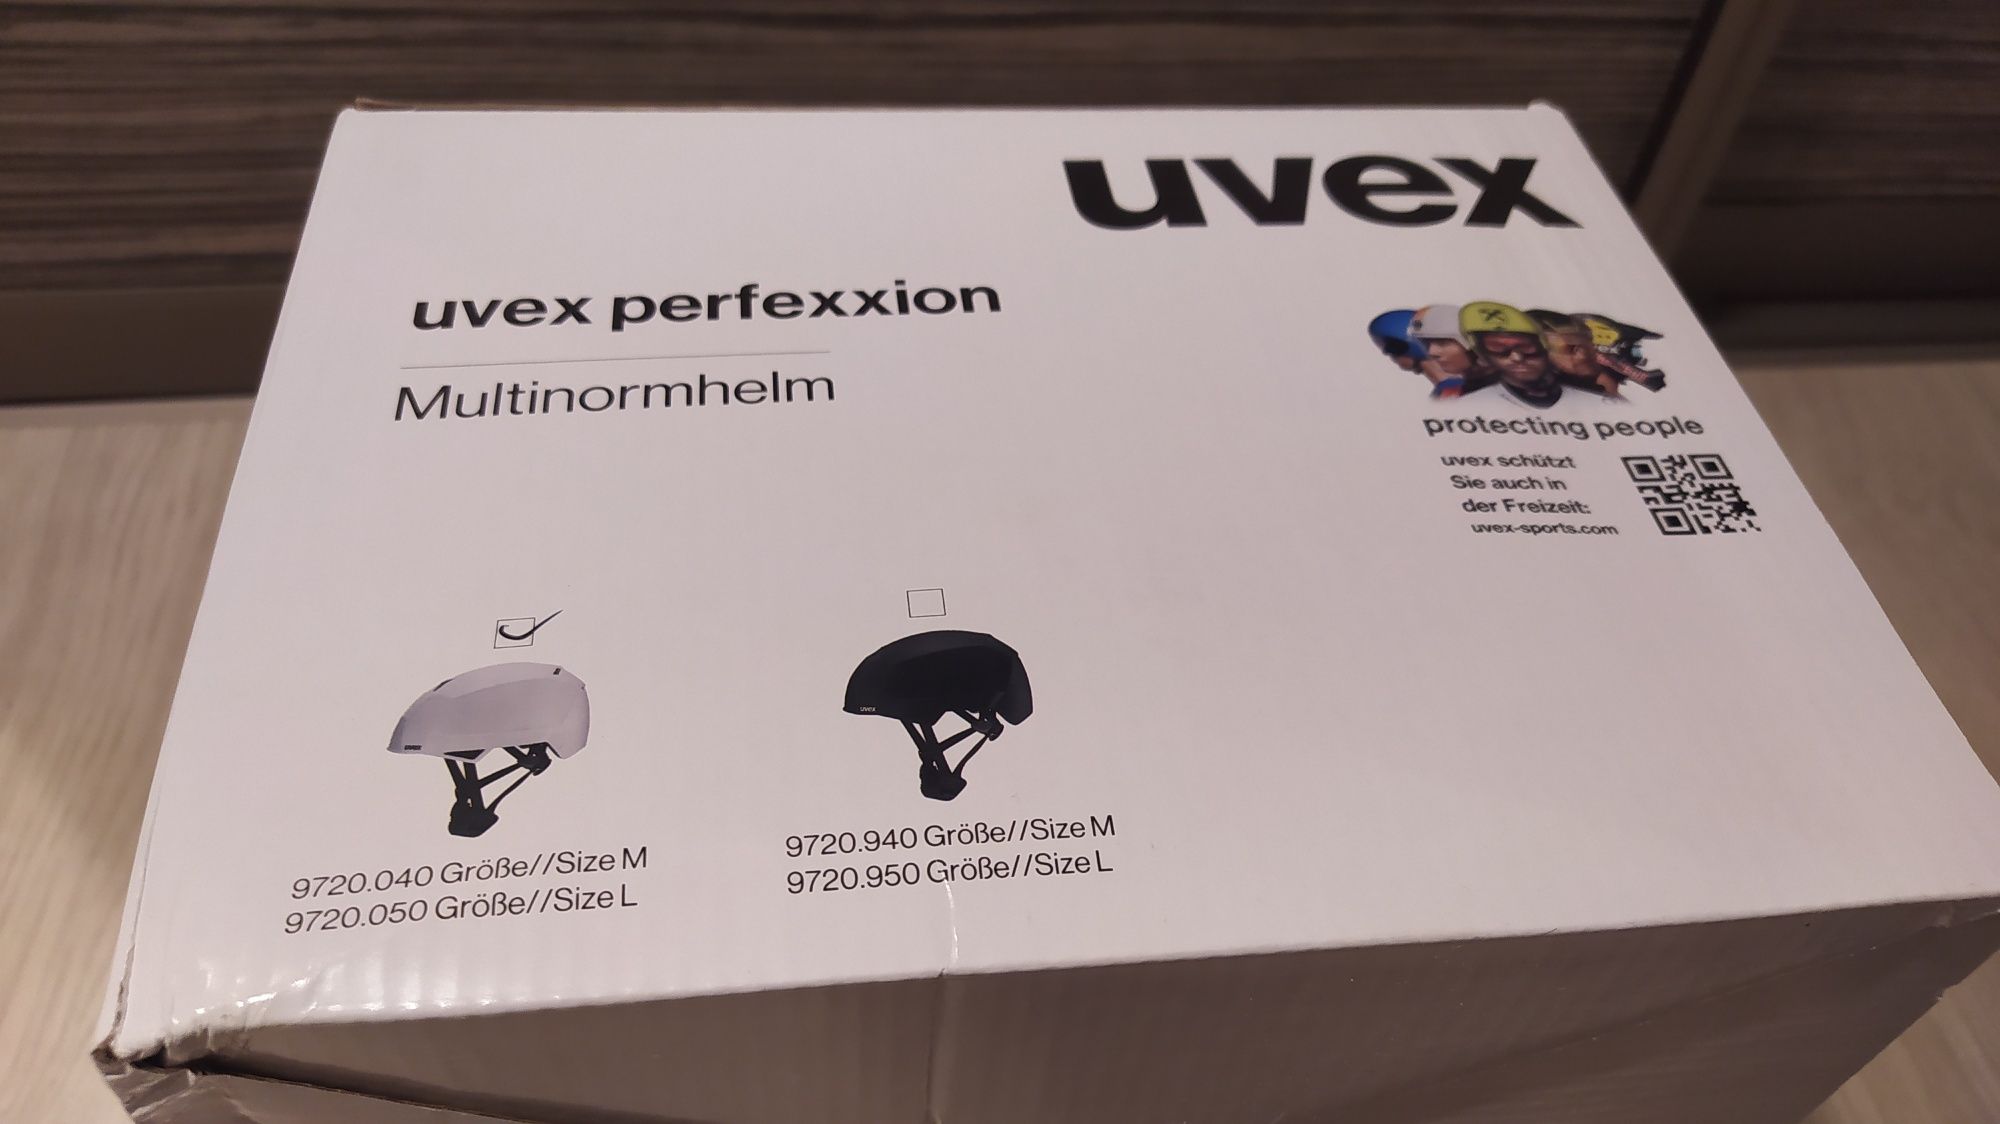 Kask ochronny UVEX perfexxion M